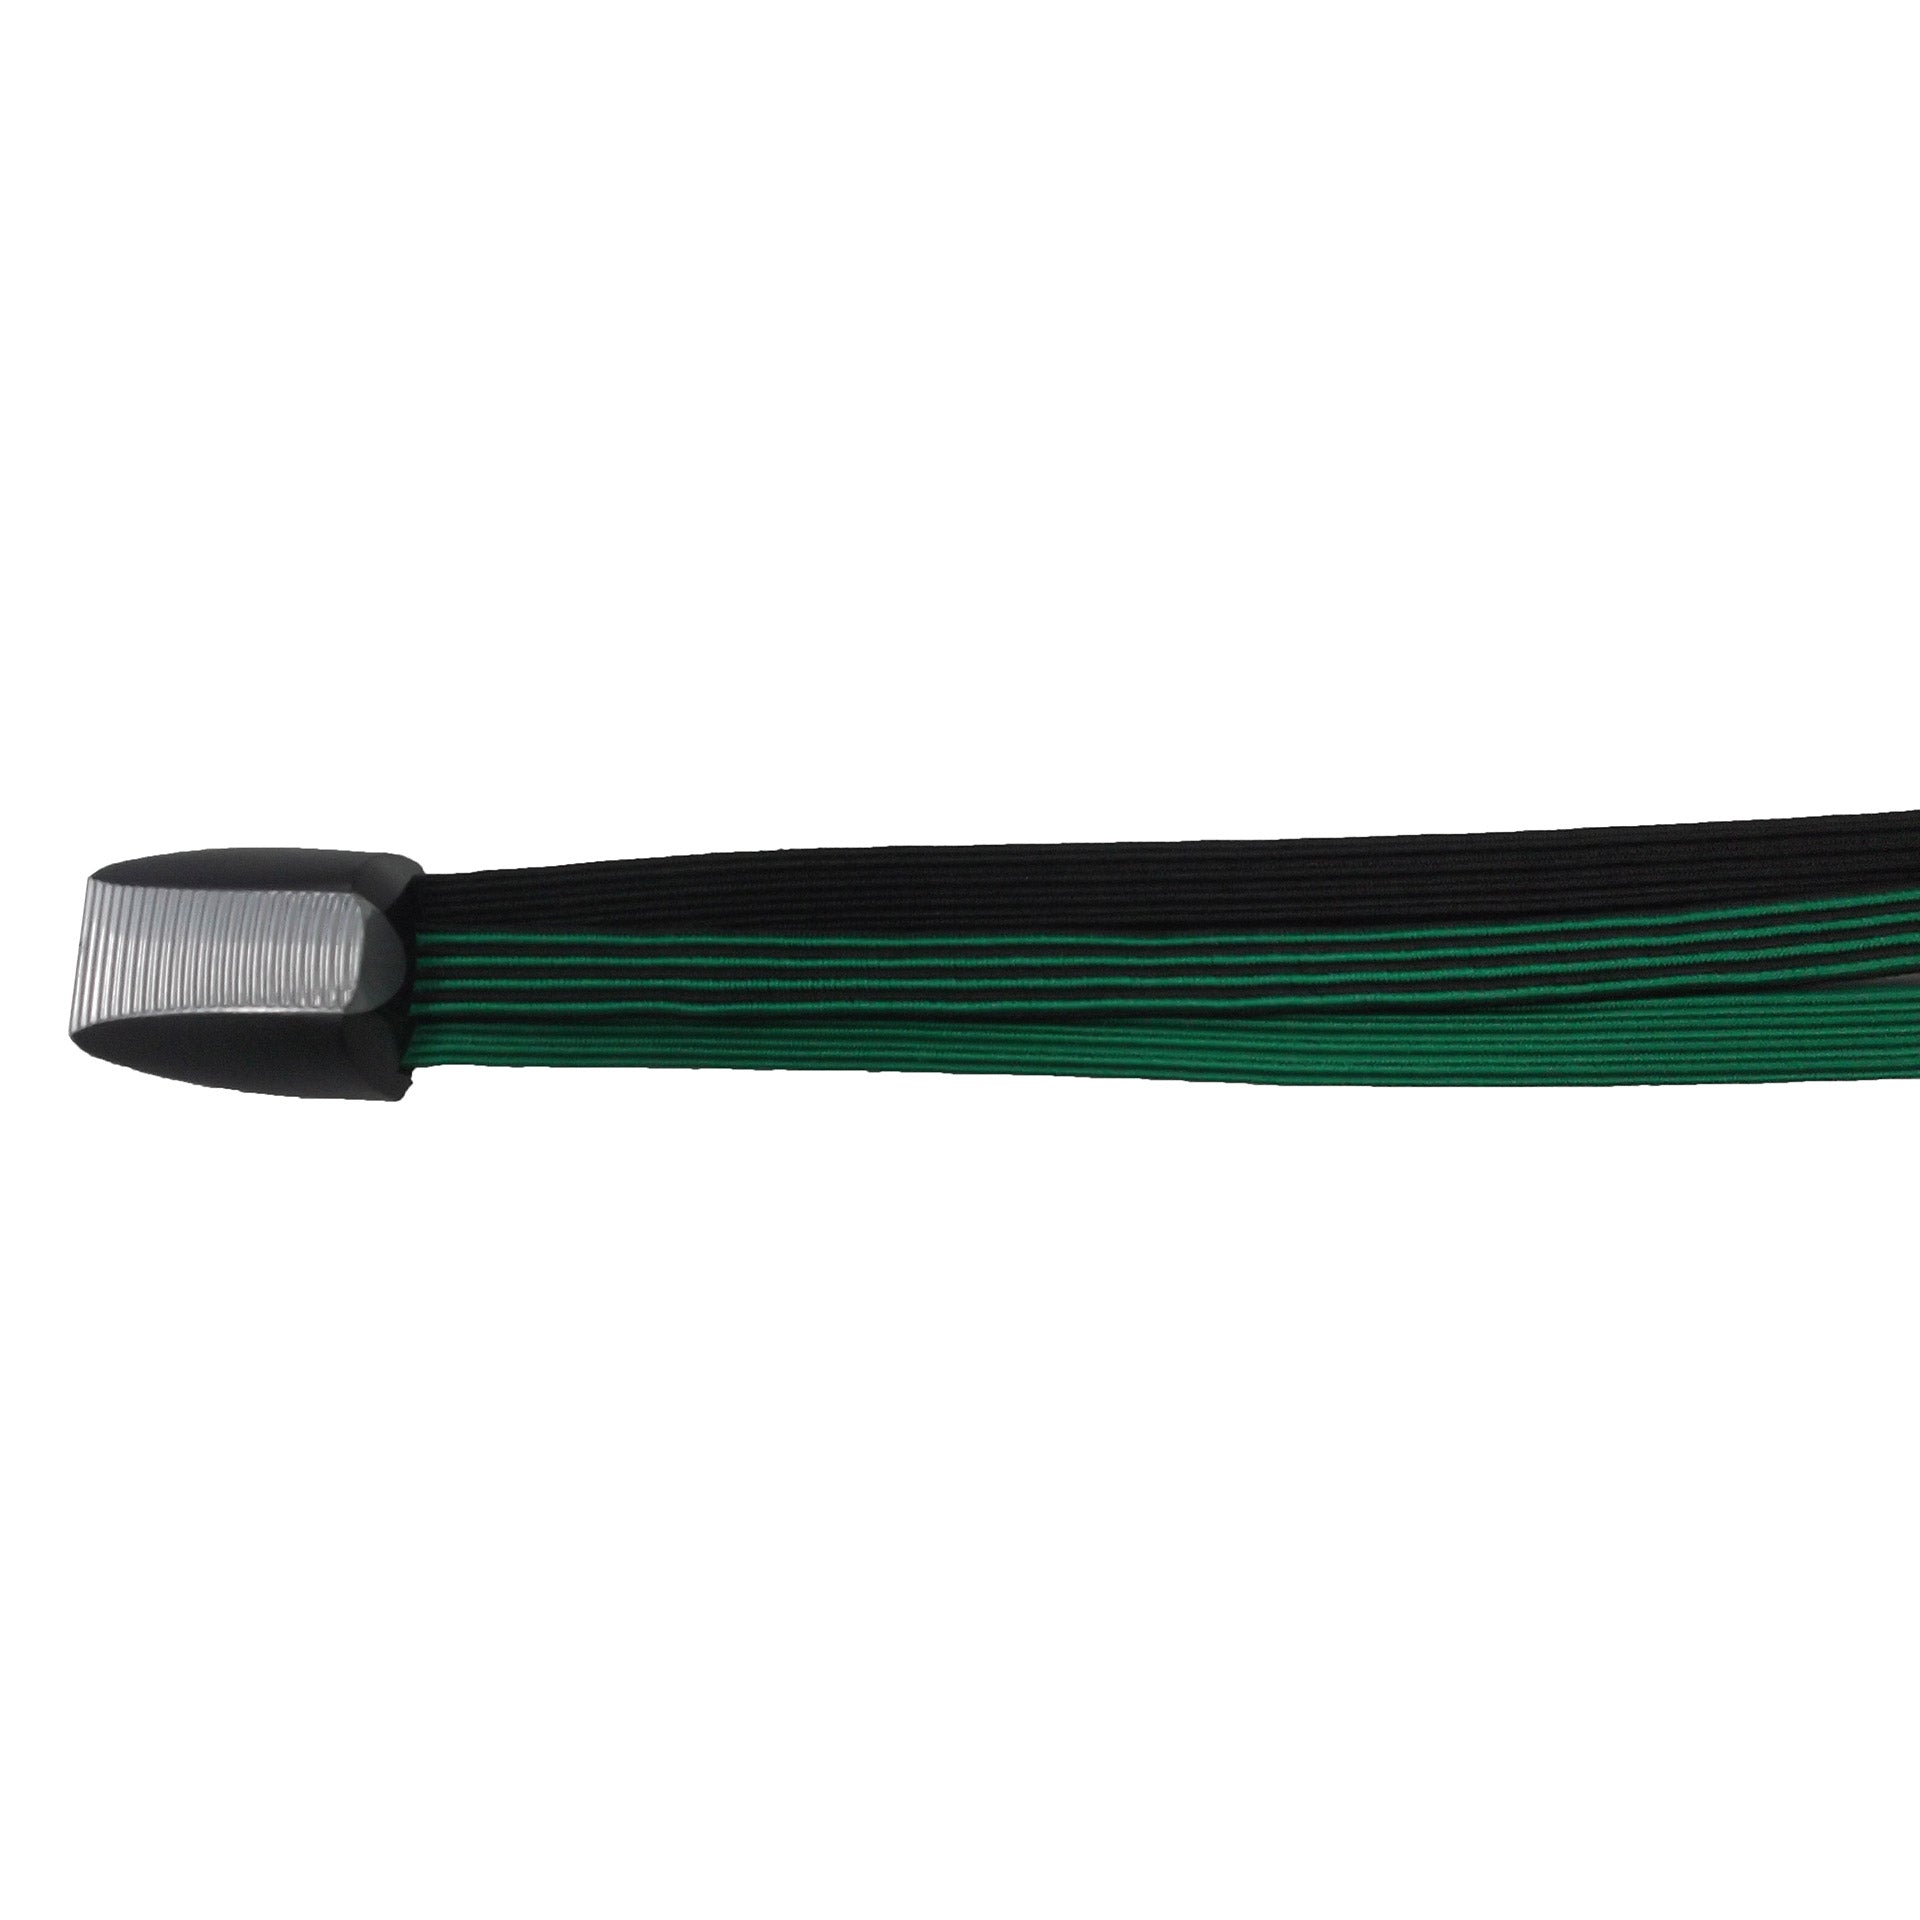 Widek Triobinder intrek zwart/ donker groen (OEM) 54cm 004024